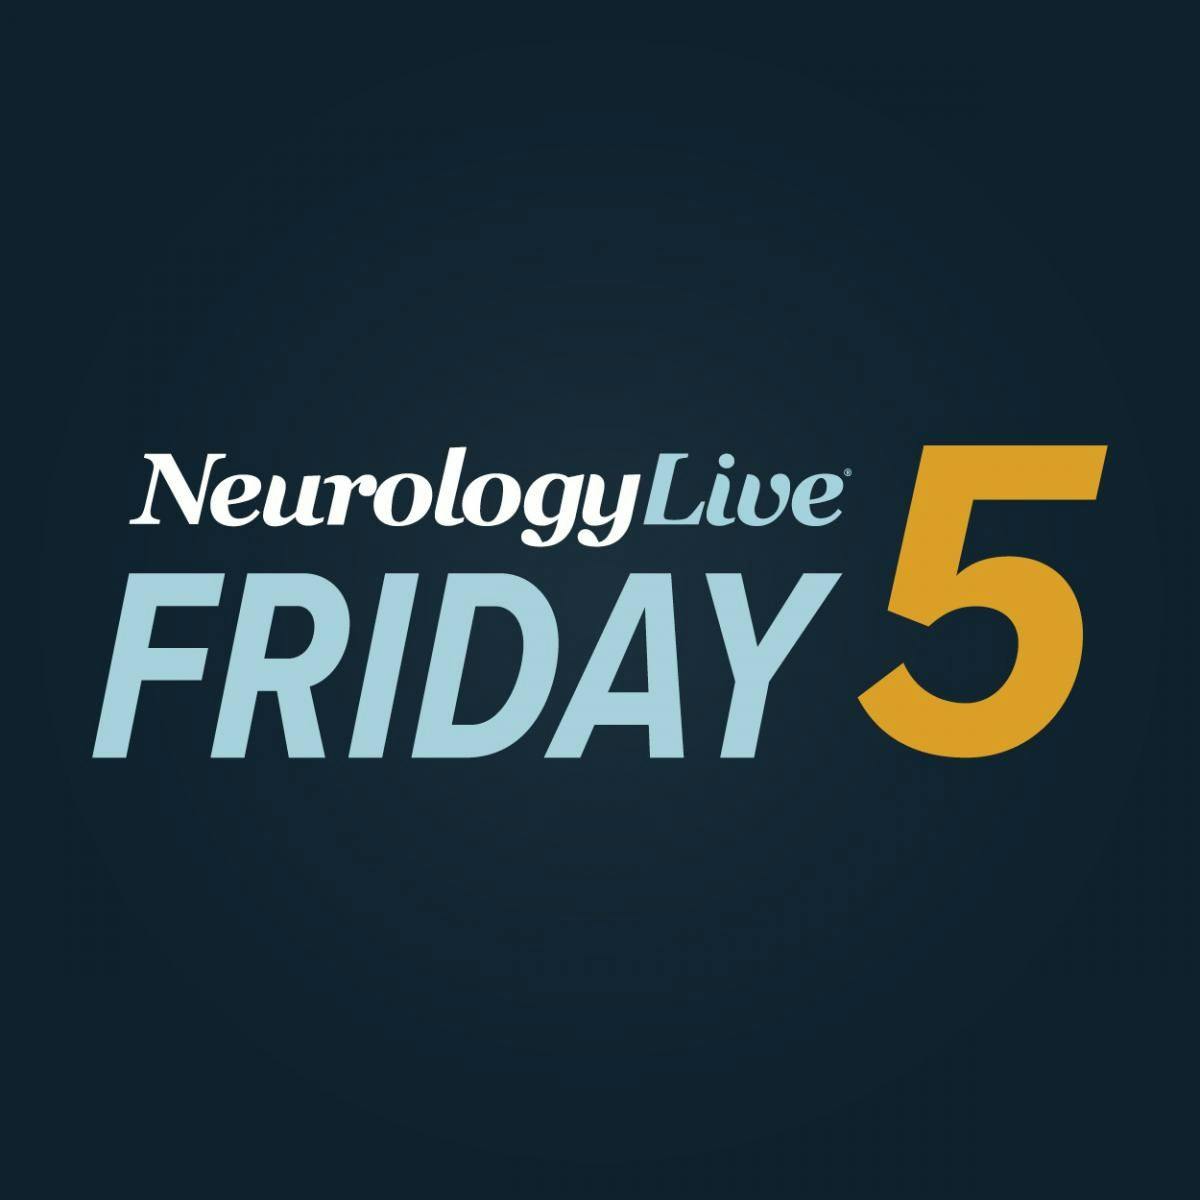 NeurologyLive Friday 5 &mdash; May 22, 2020